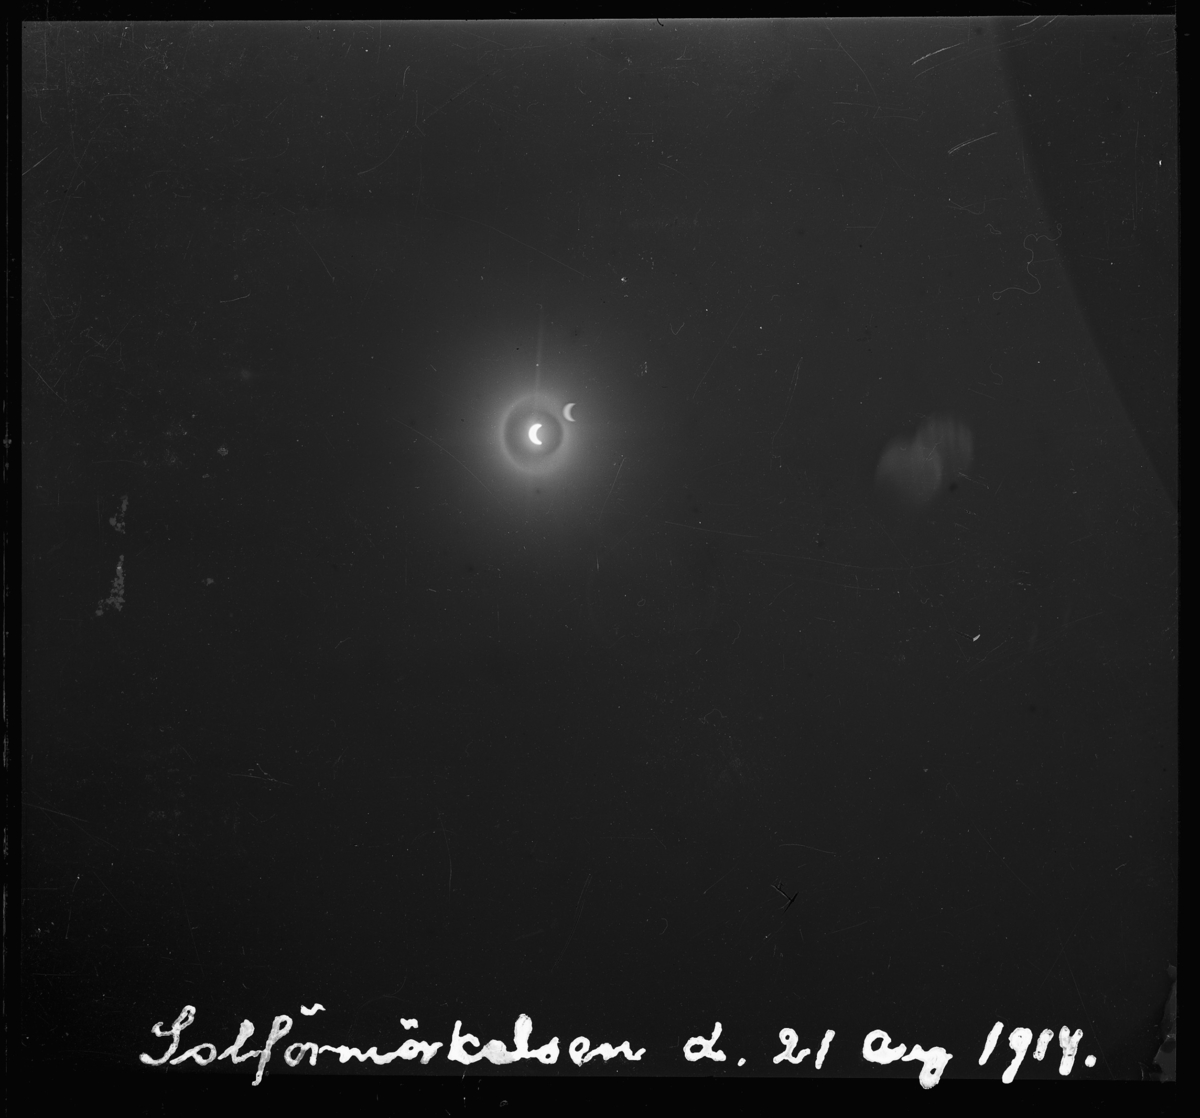 Solförmörkelse d. 21 aug 1914.